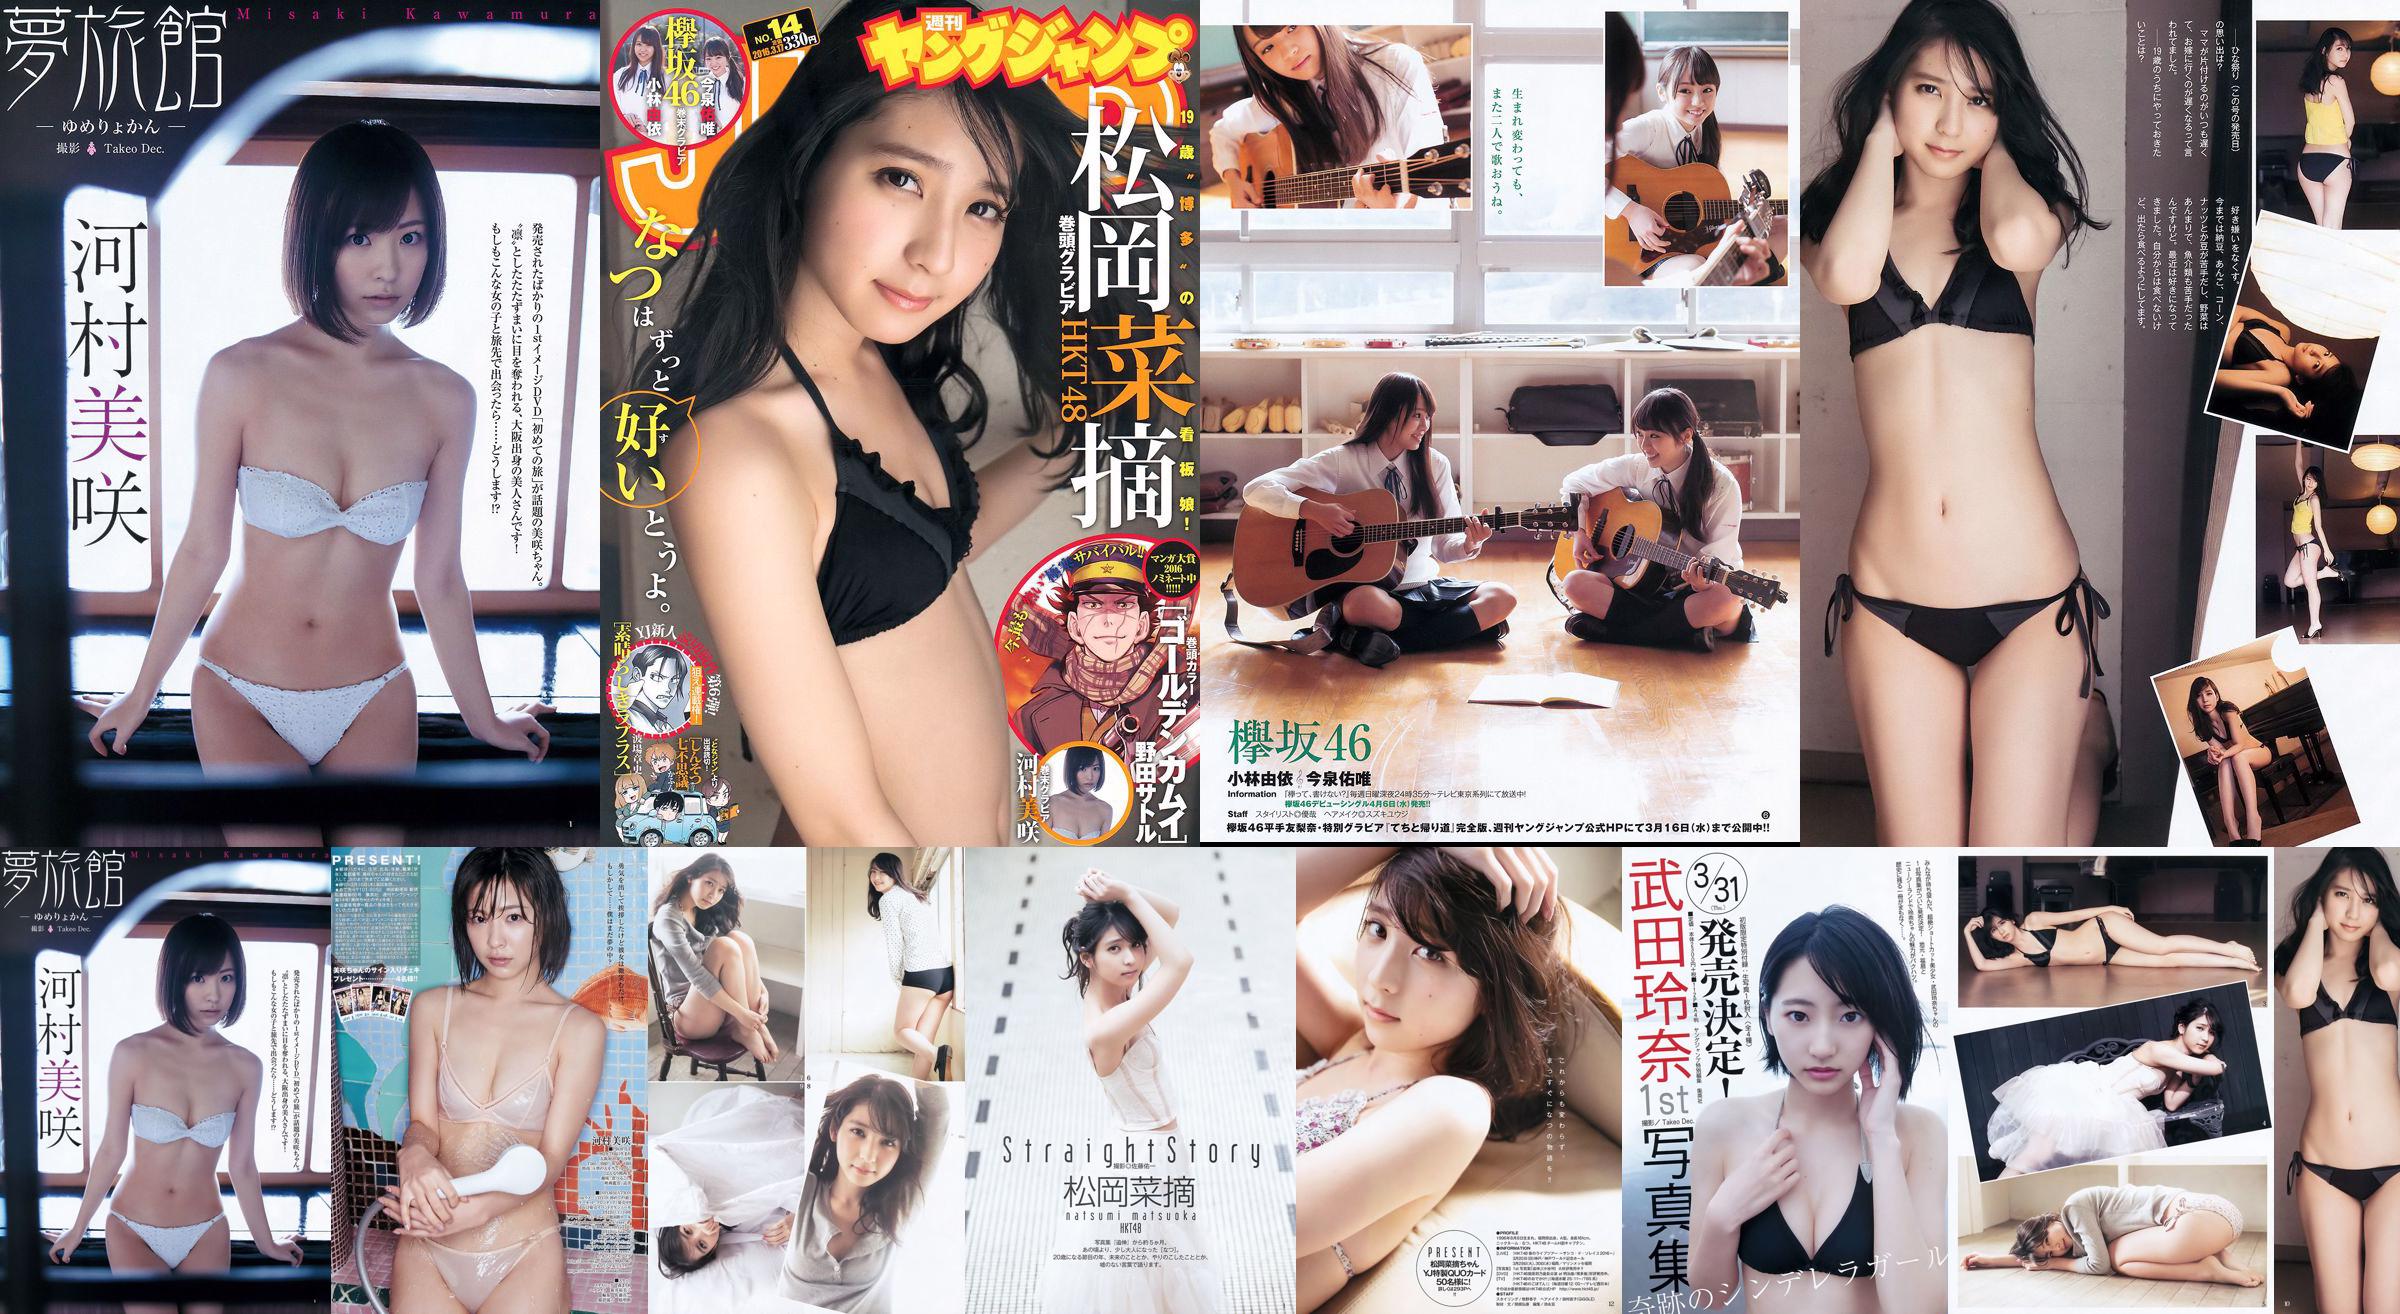 Pilihan Sayur Muraoka Yui Kobayashi Yui Imaizumi Misaki Kawamura [Lompat Muda Mingguan] Majalah Foto No. 14 2016 No.ea831c Halaman 3